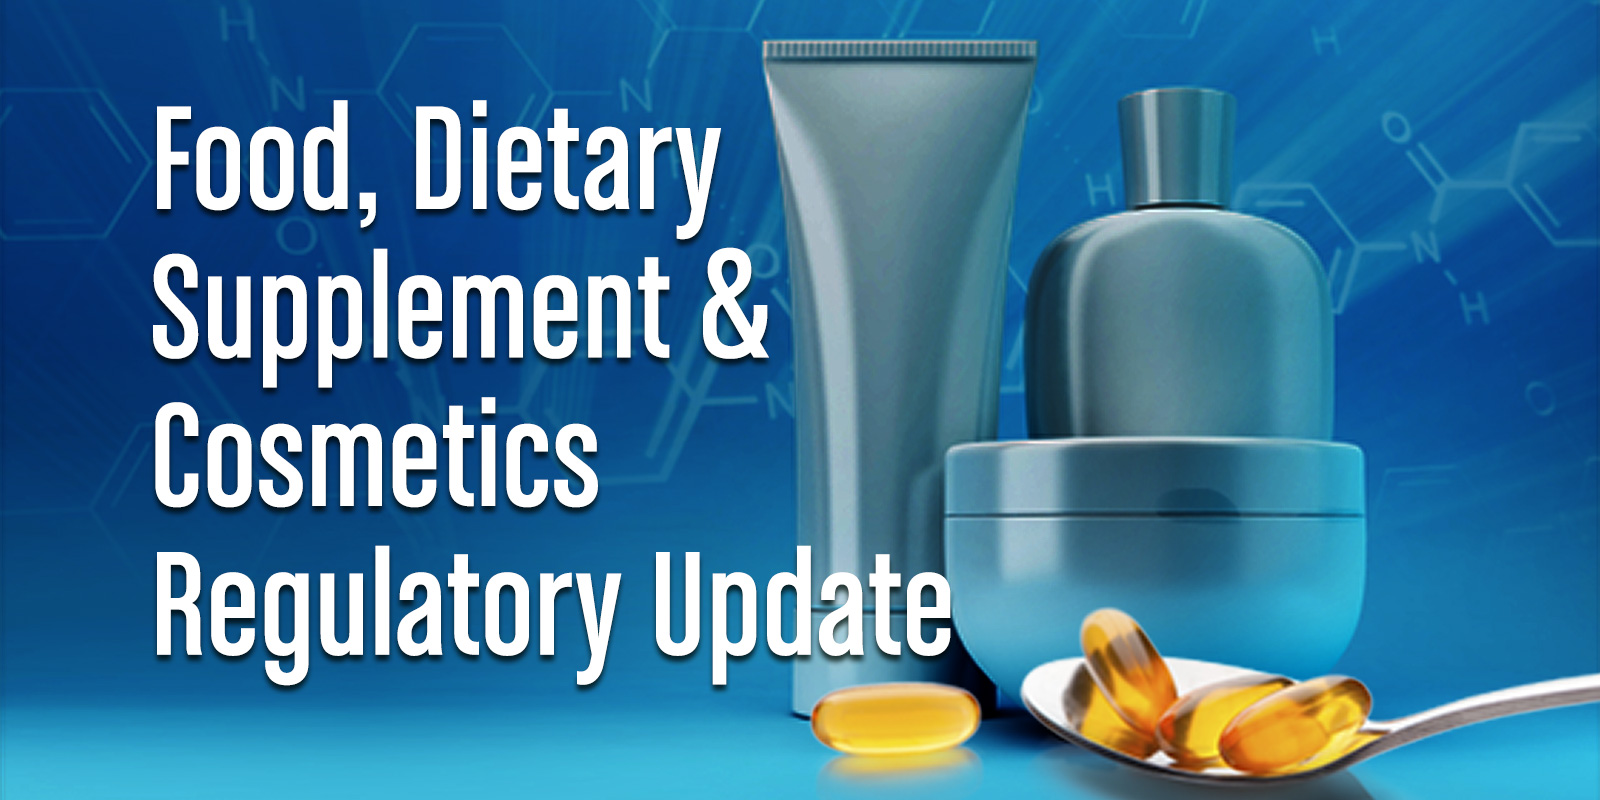 Food, Dietary Supplement & Cosmetics Regulatory Update | Vol. IV, Issue 1